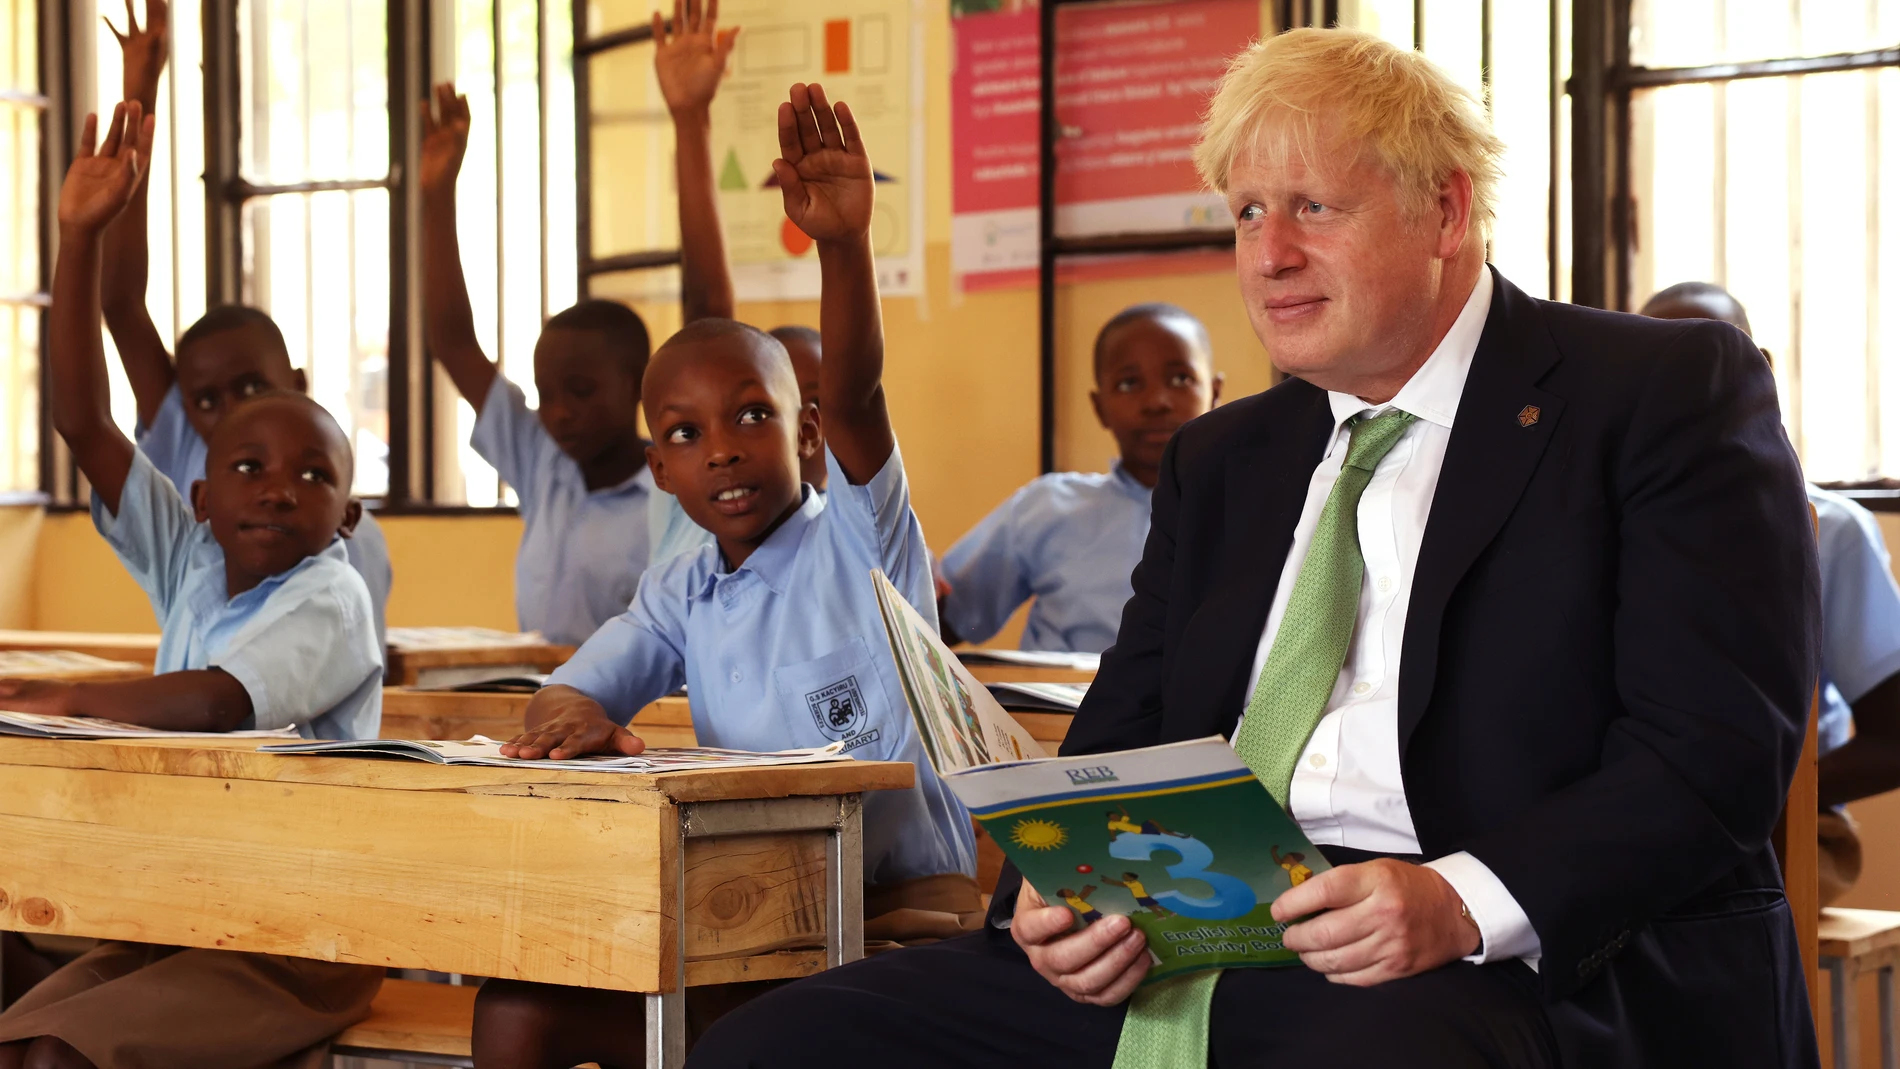 El primer ministro, Boris Johnson, atiende a una clase durante su visita a Kigali, Ruanda